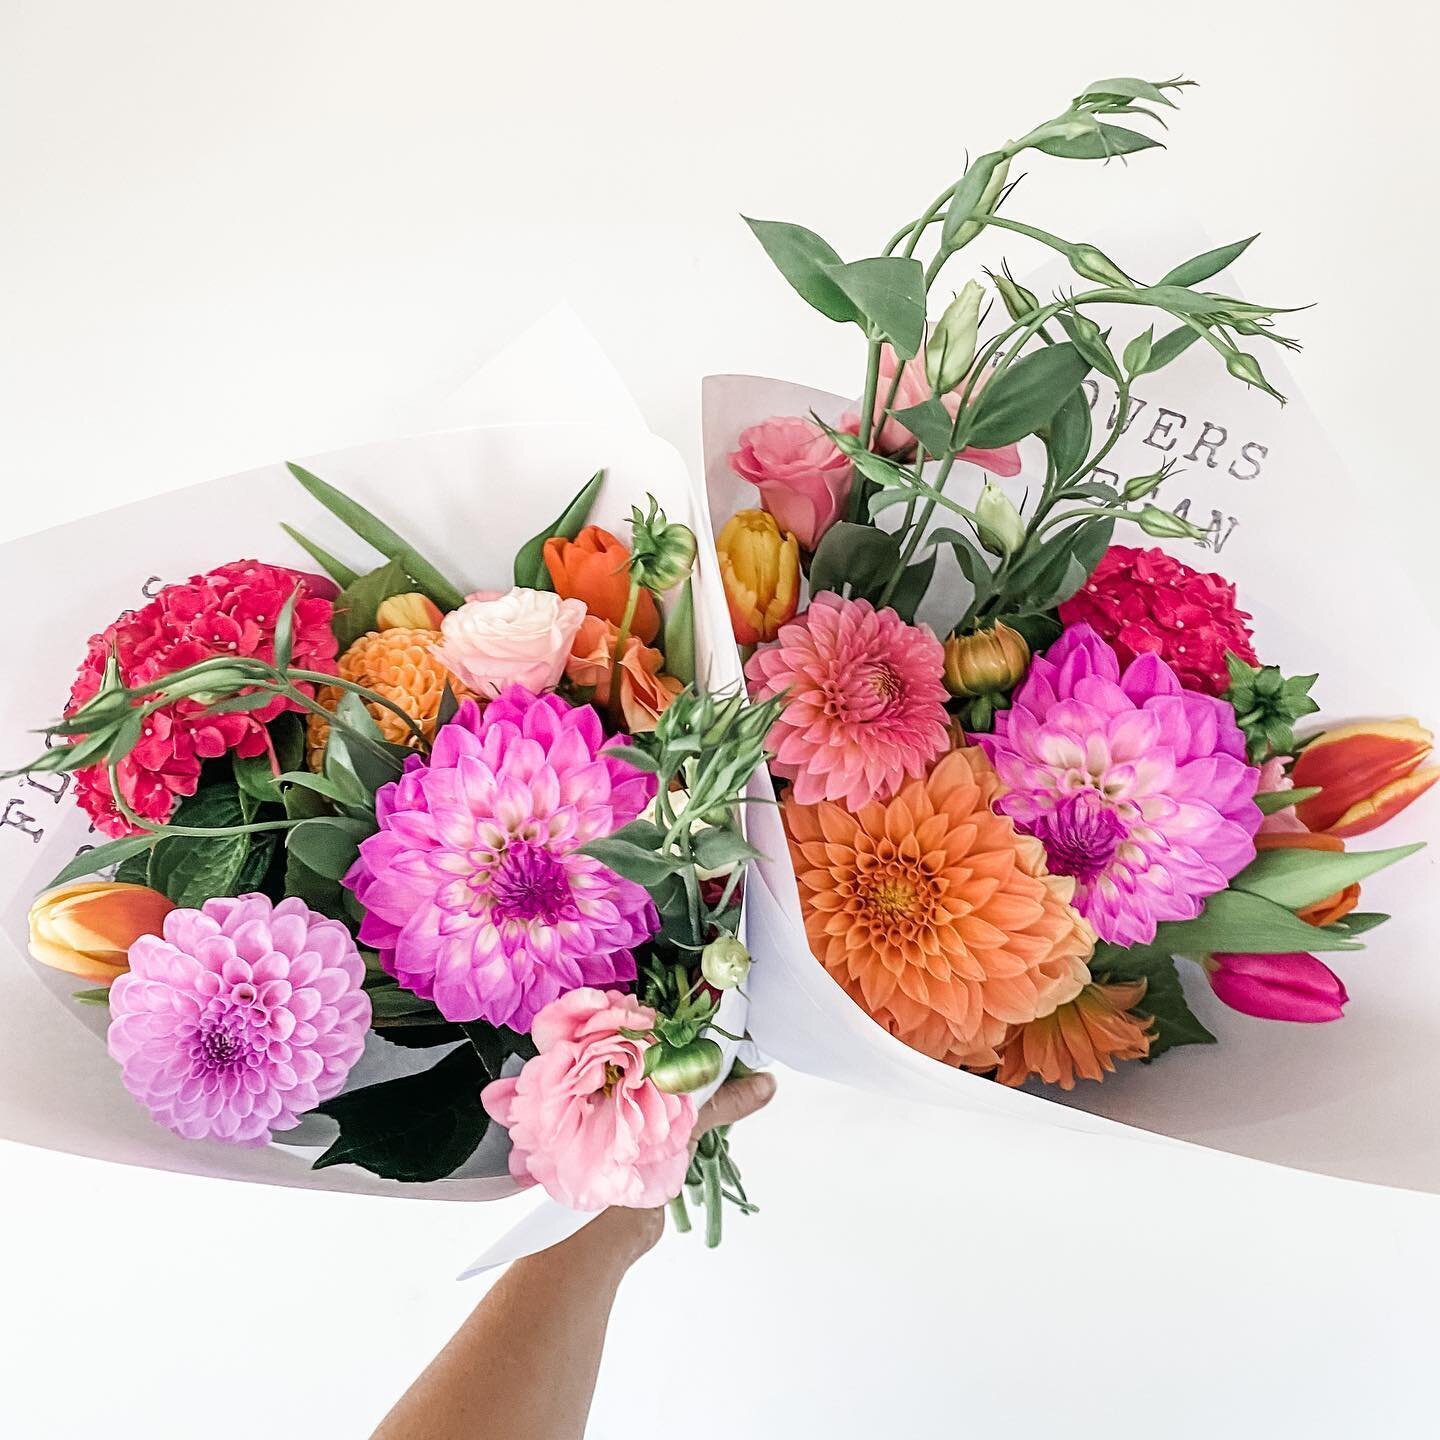 Monday blooms 🧡

Order online 
Www.flowersbytegan.com.au